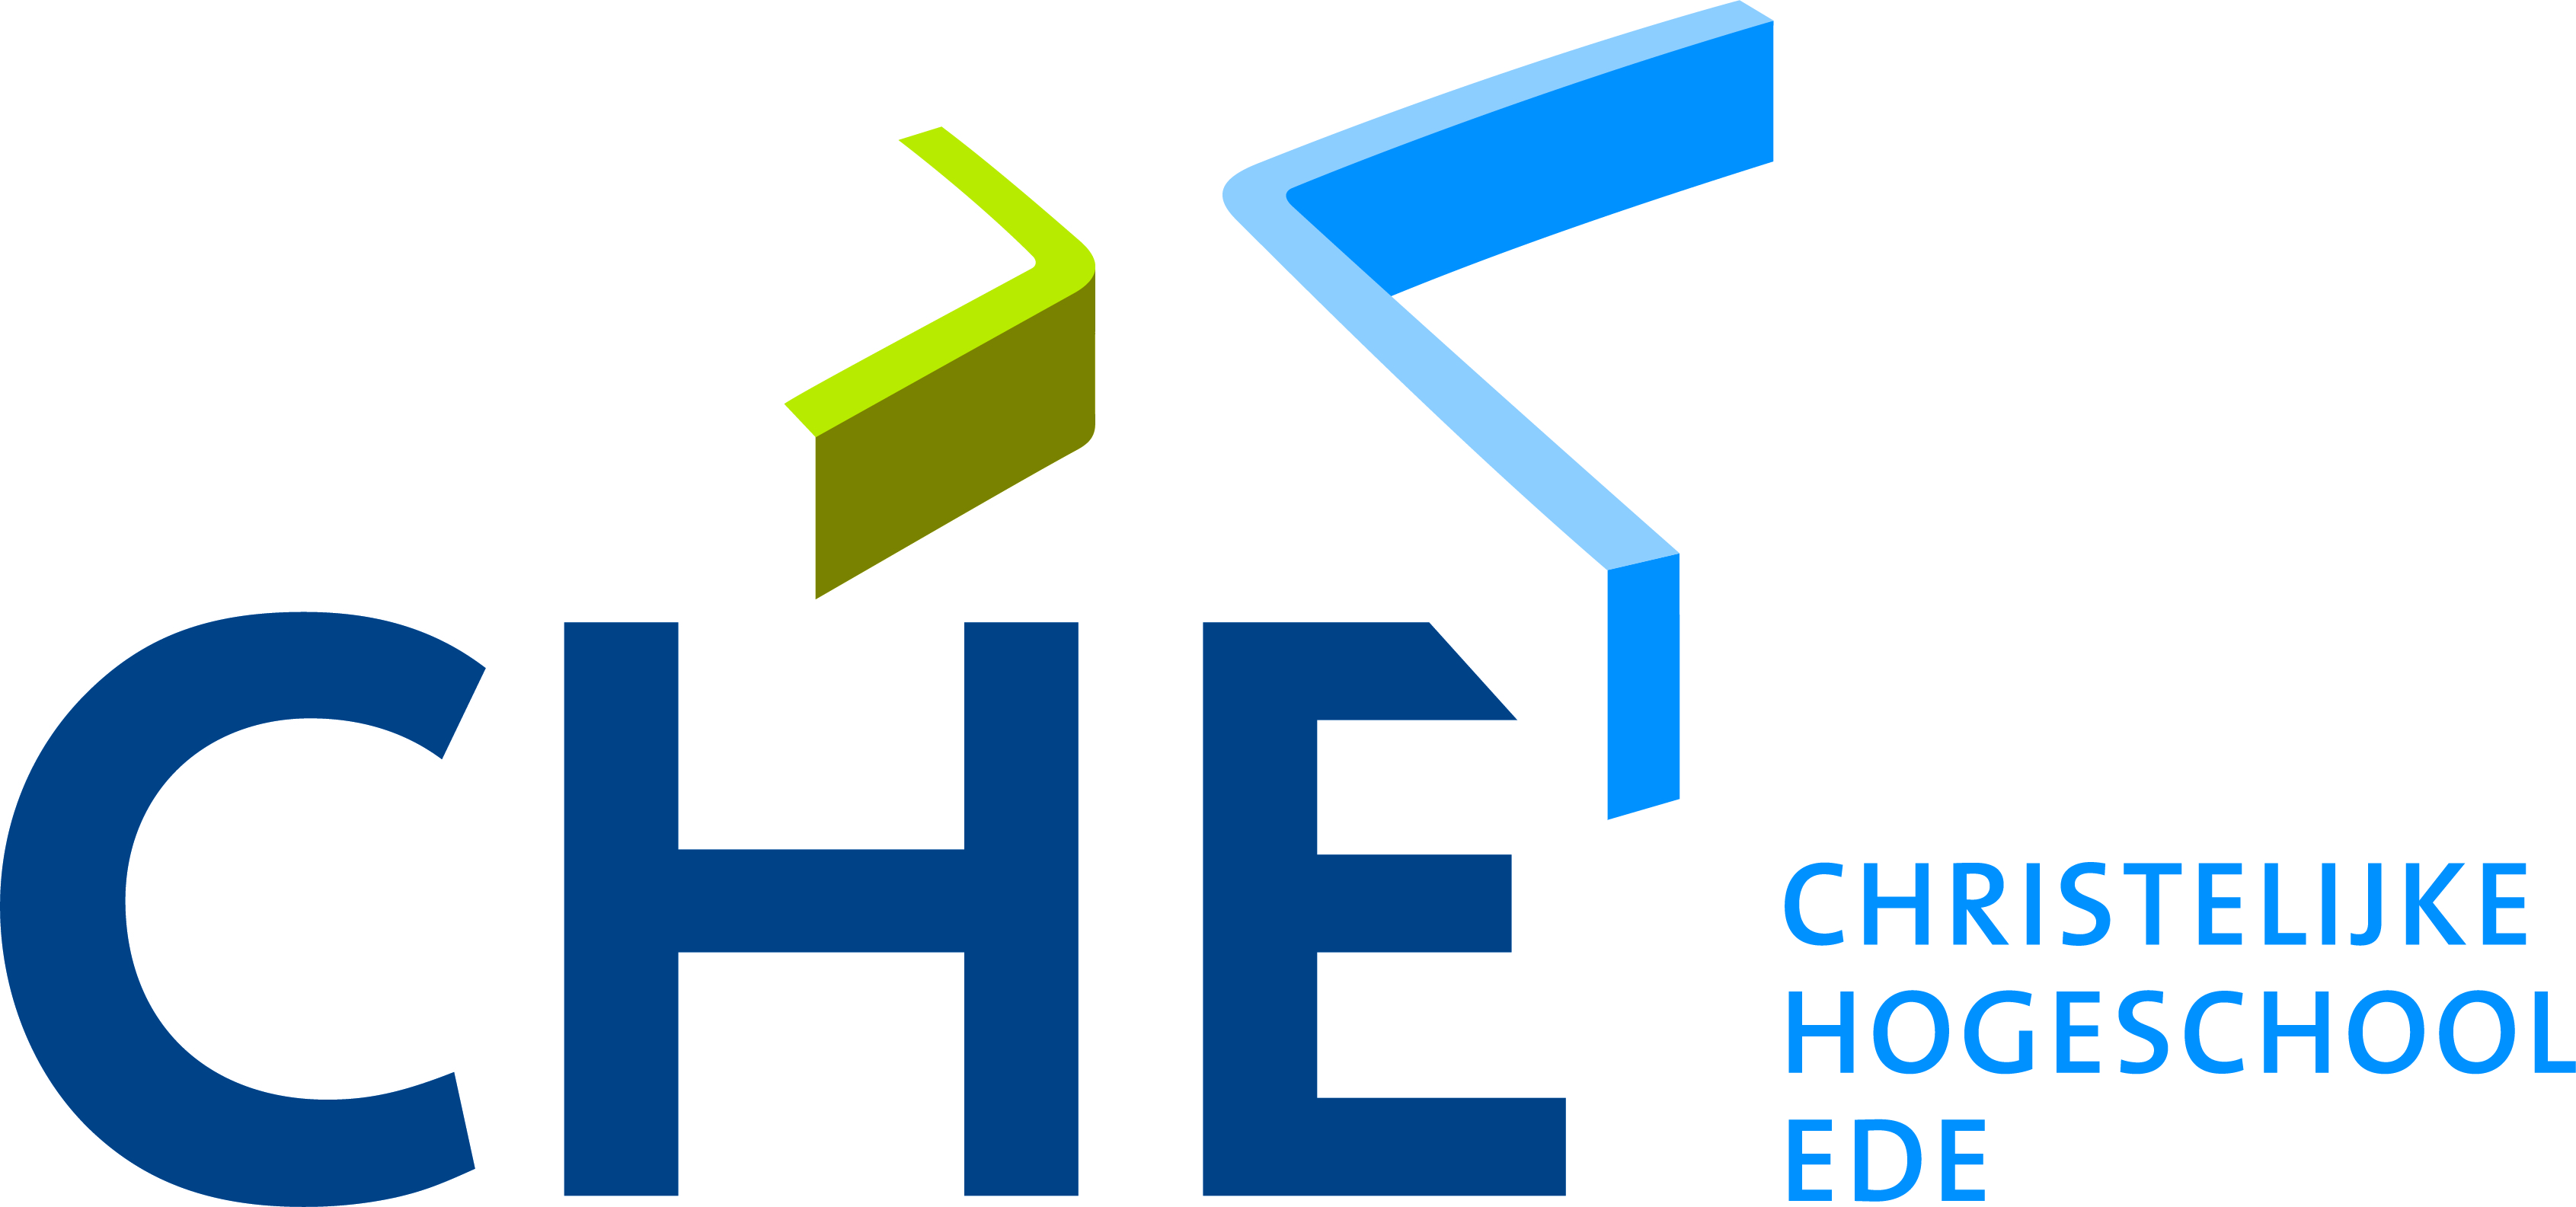 Christelijke Hogeschool Ede logo